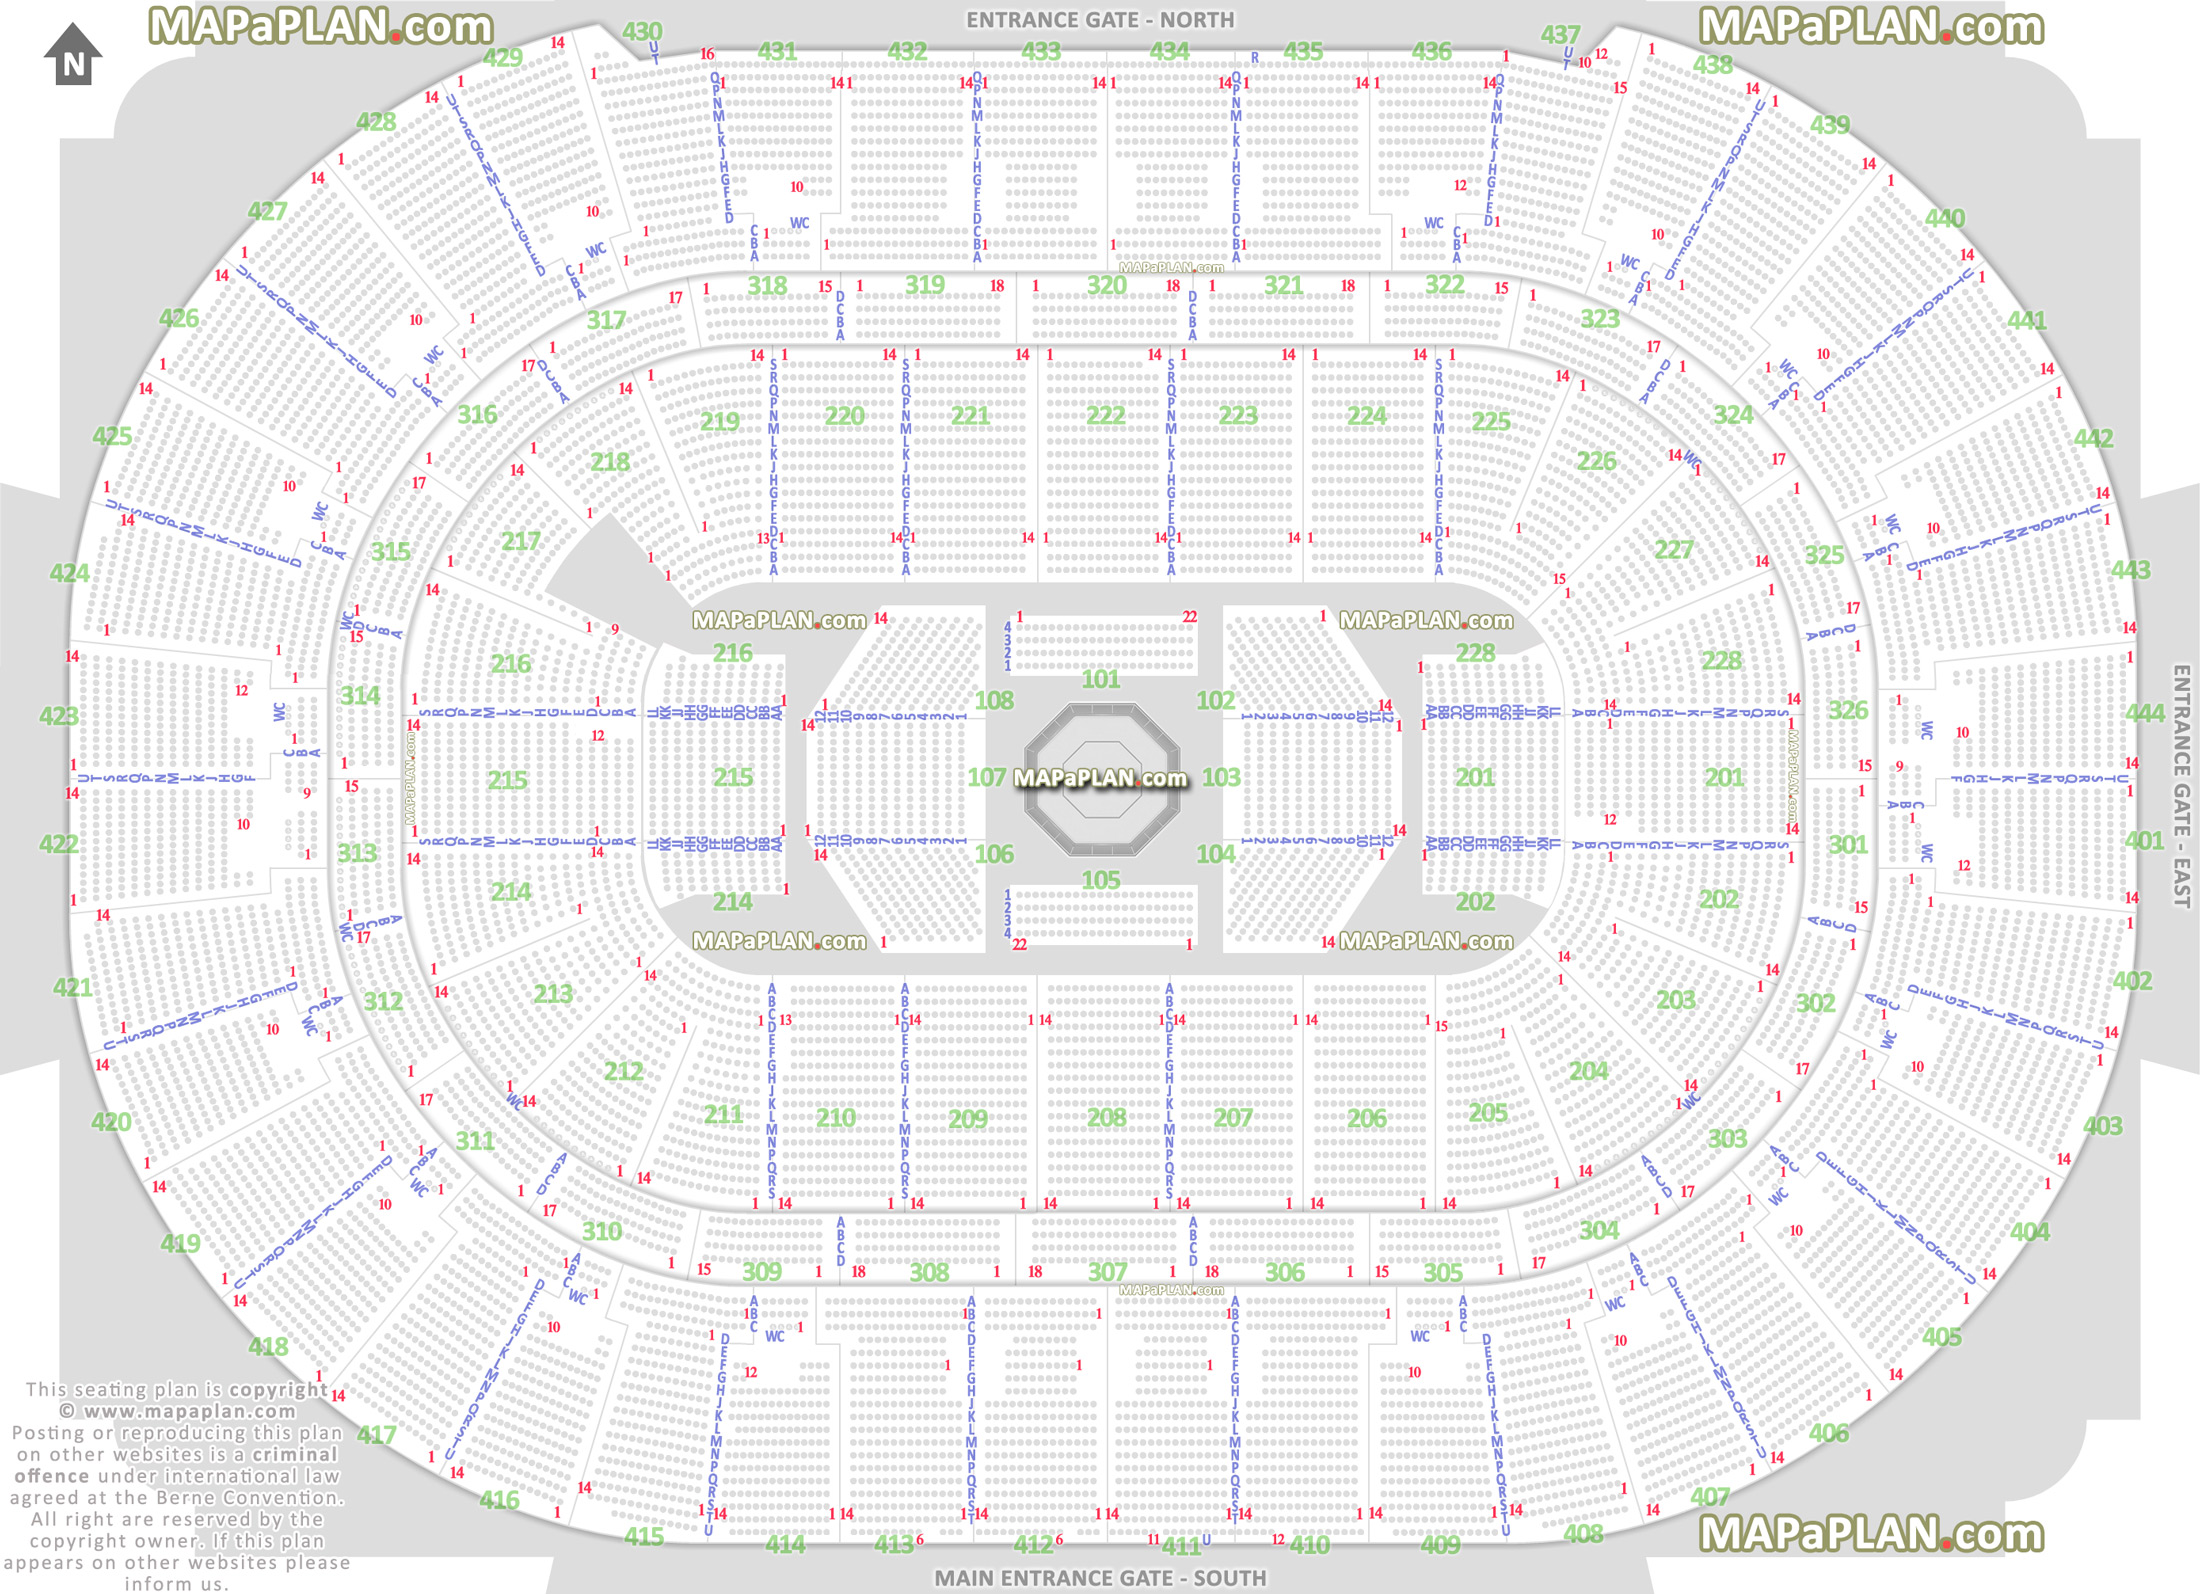 Ufc Honda Center Seating Chart